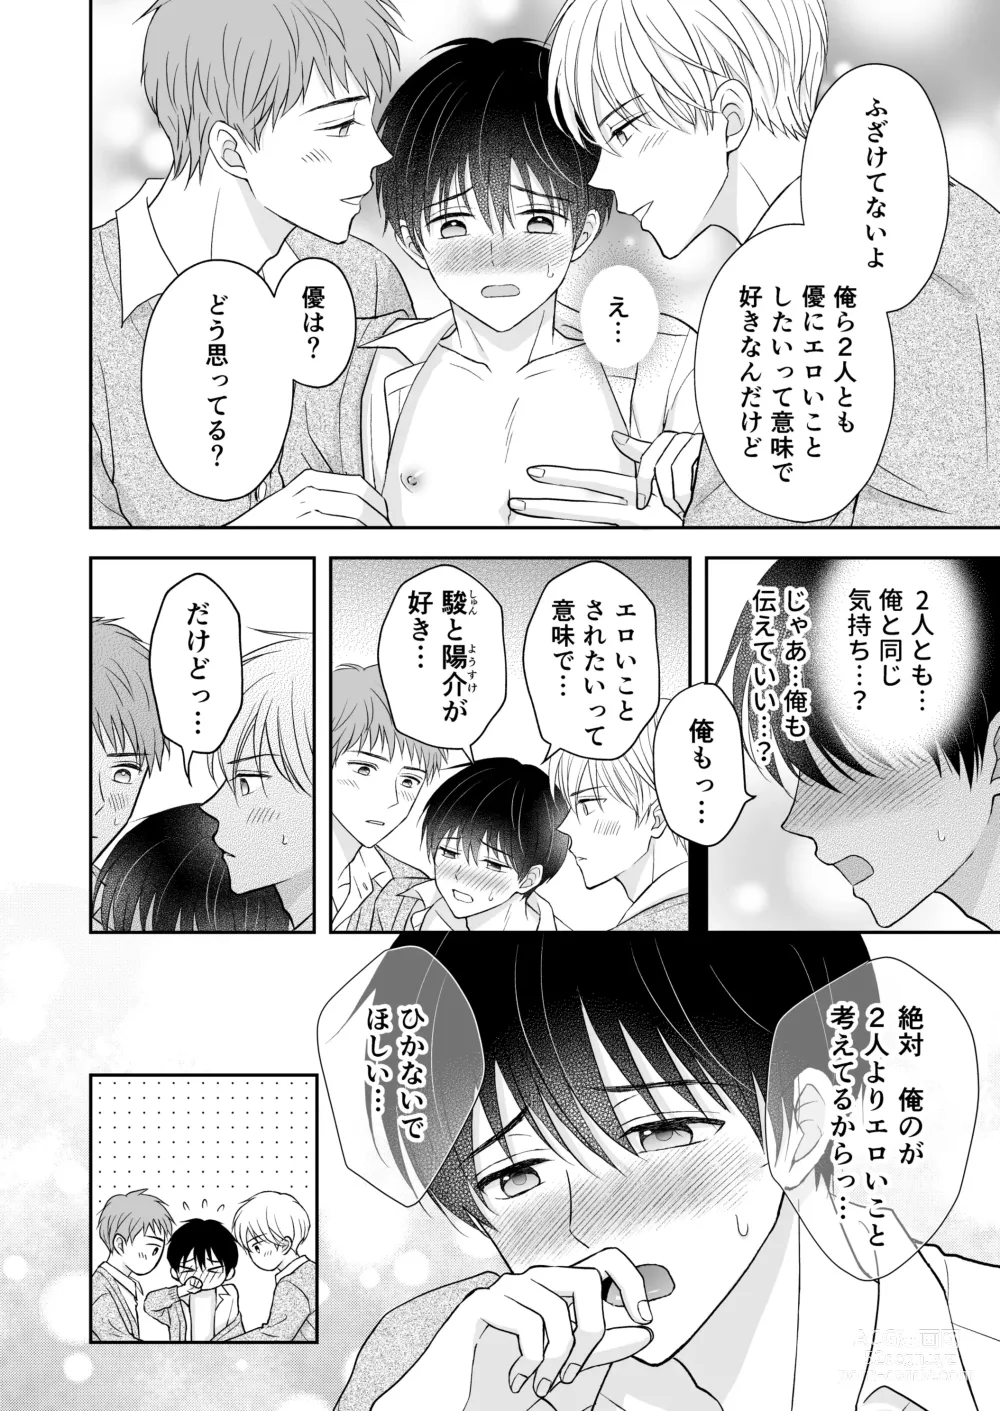 Page 7 of doujinshi 3-nin wa Nakayoshi